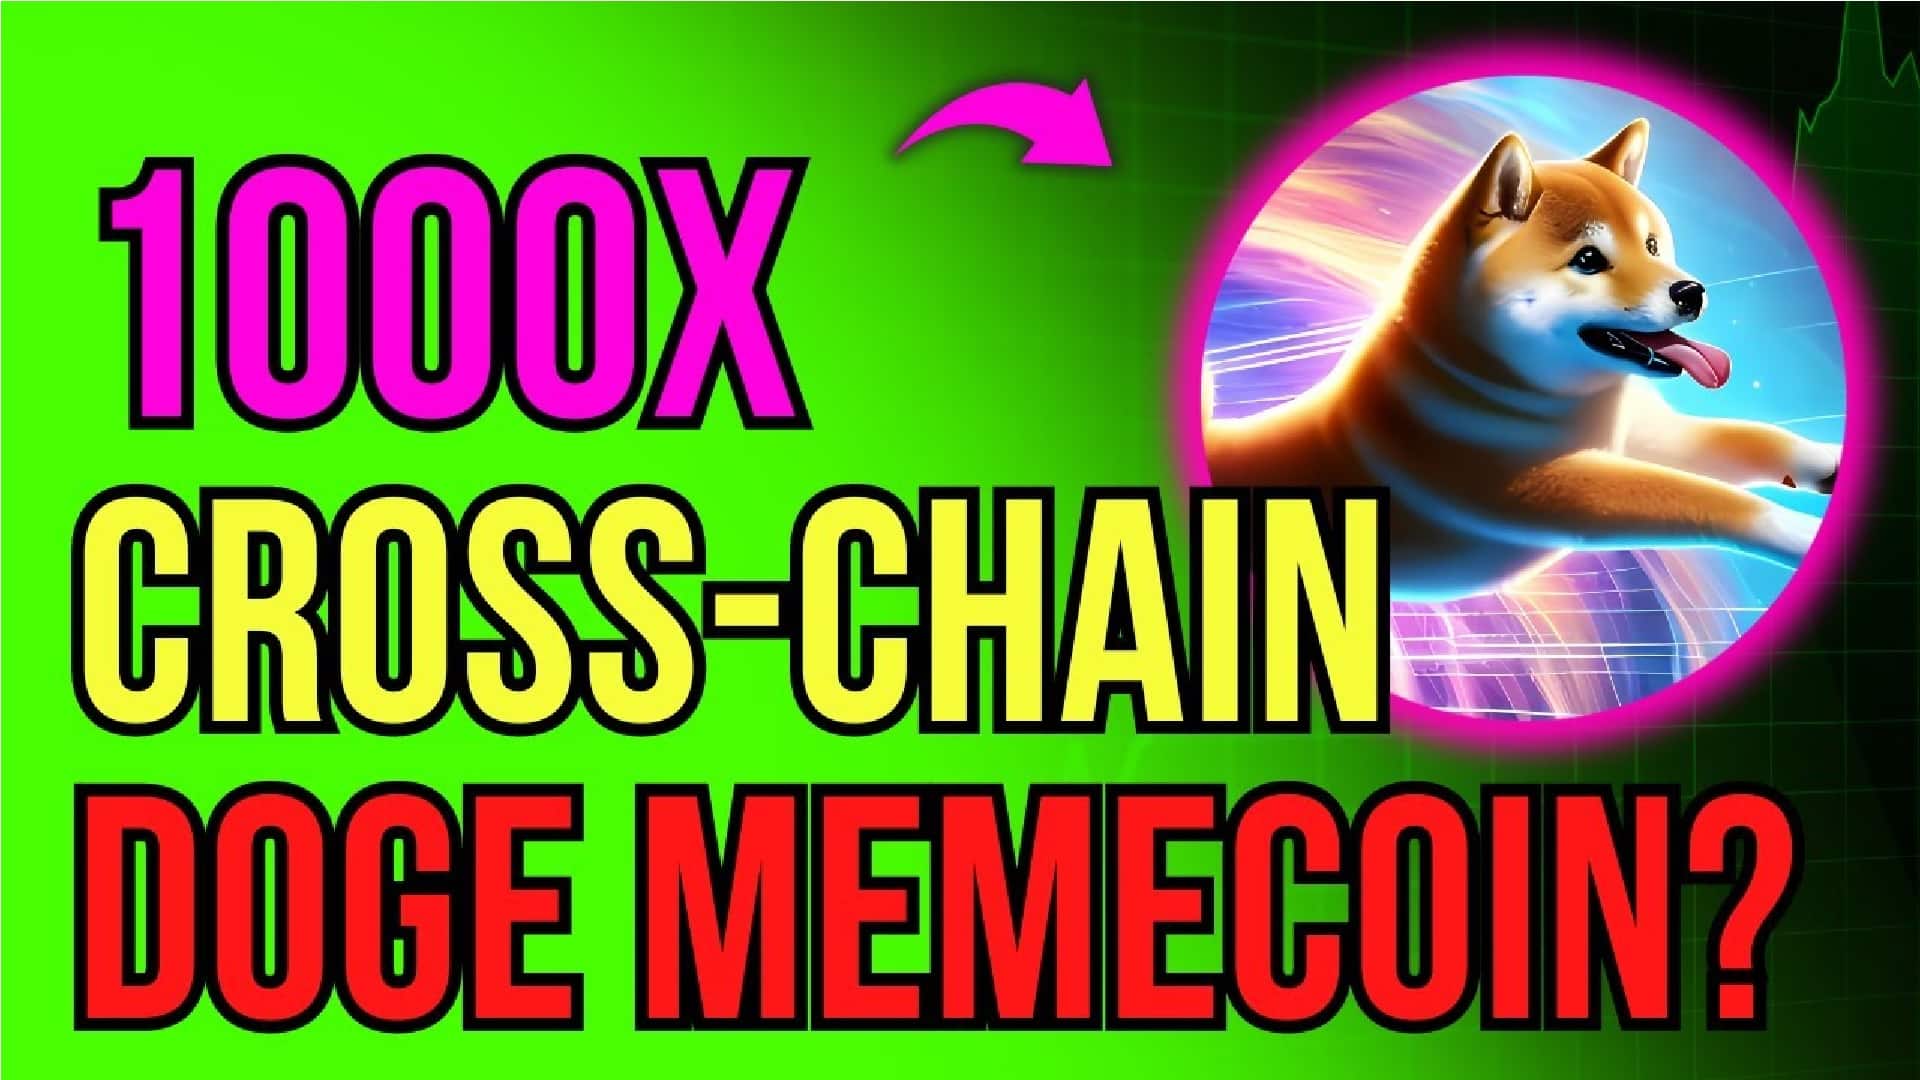 First Cross-Chain Dog Meme Coin Presale Exceeds Soft Cap Target - Next 1000x Crypto Gem?